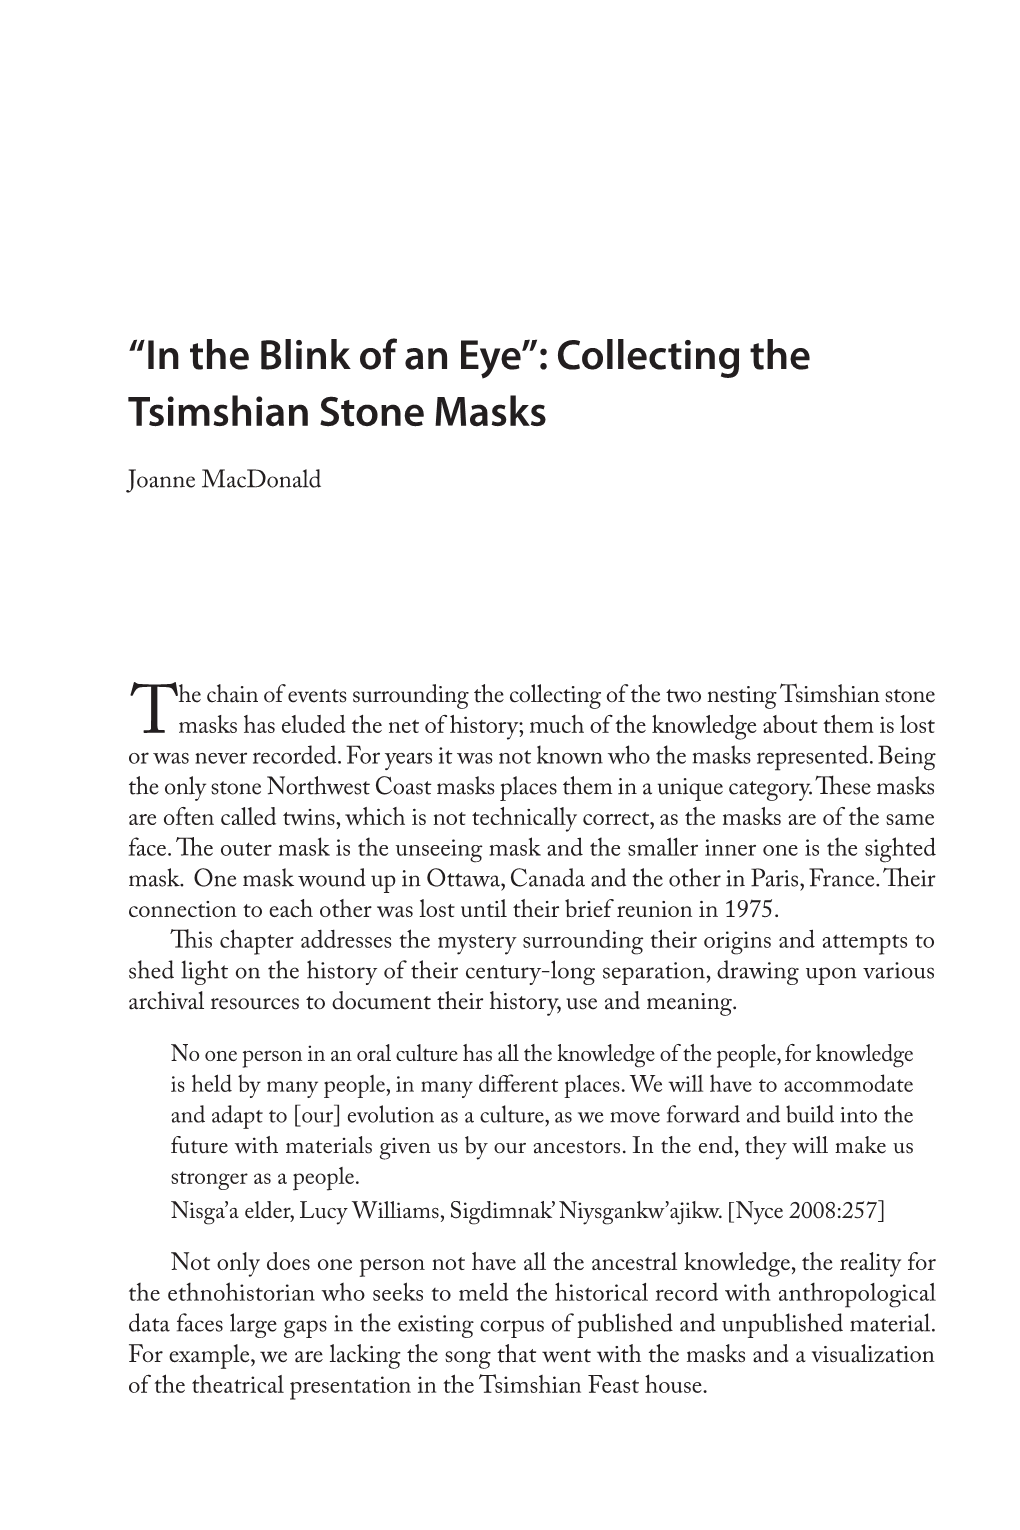 Collecting the Tsimshian Stone Masks